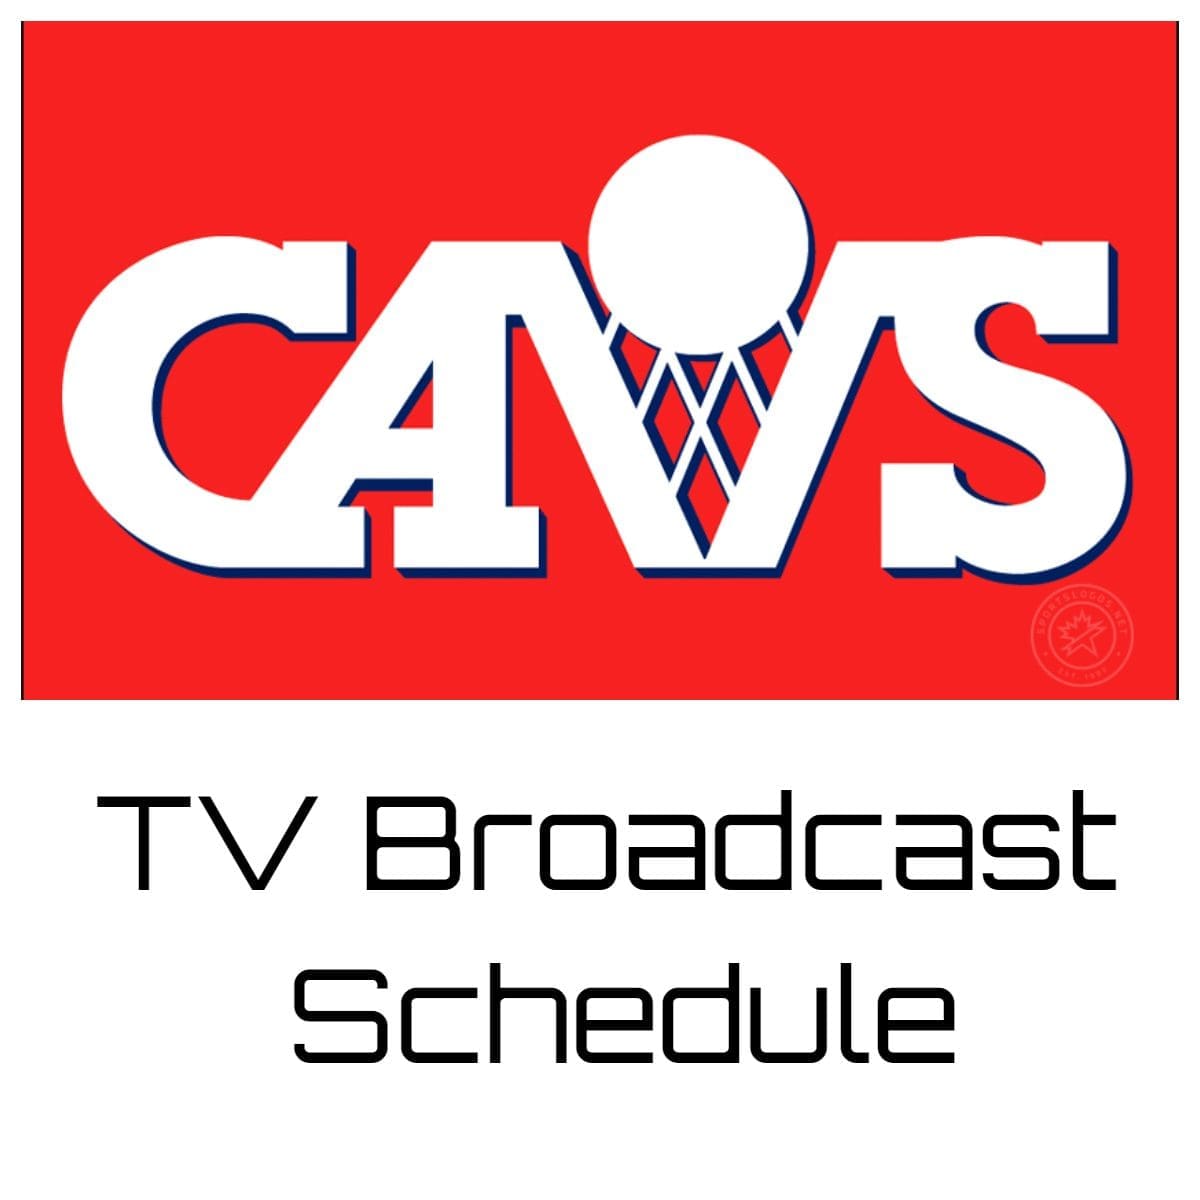 Cleveland Cavaliers TV Broadcast Schedule